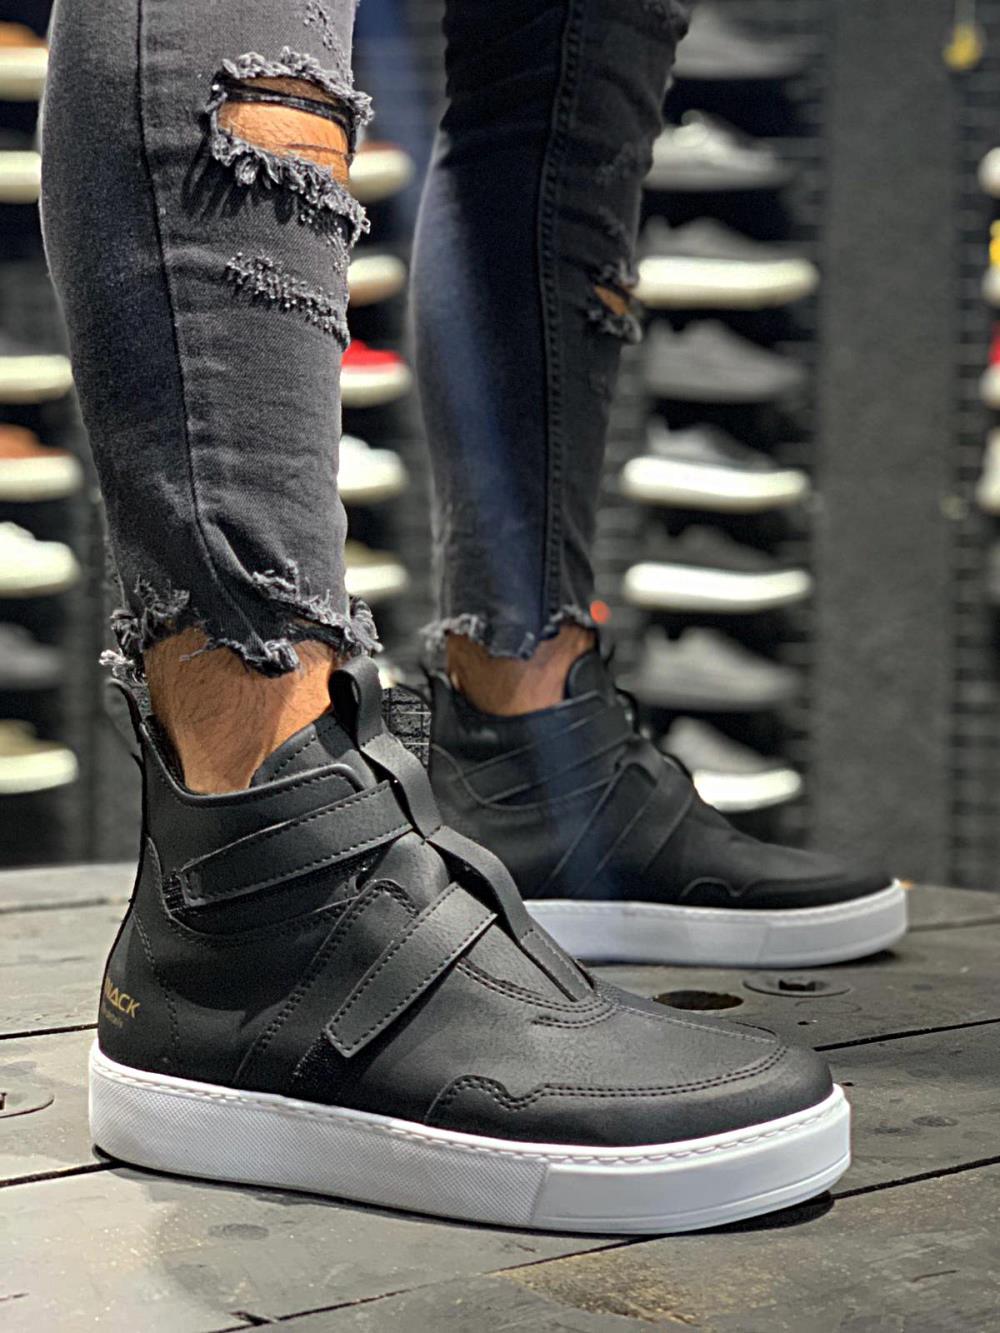 Men's Casual Sneaker Sport Boots 033 Black White - STREET MODE ™